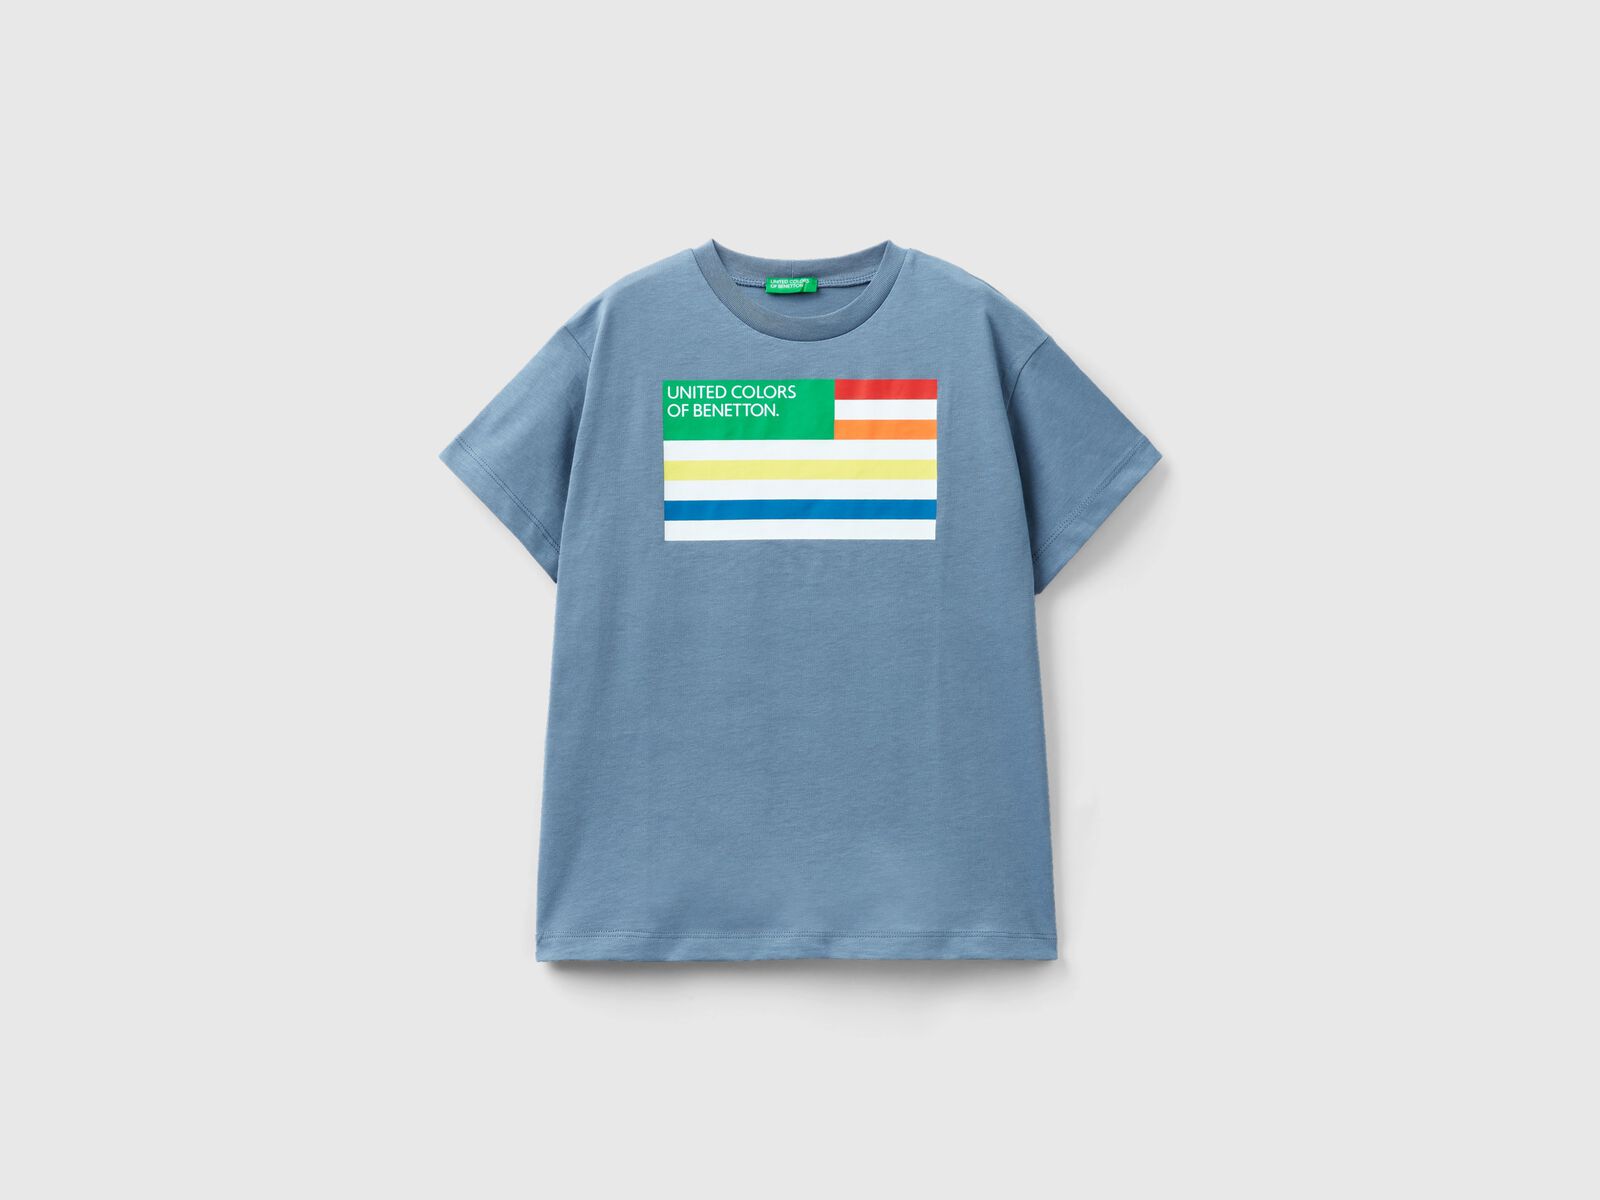 T-Shirt aus 100% Bio-Baumwolle | Benetton - Taubenblau